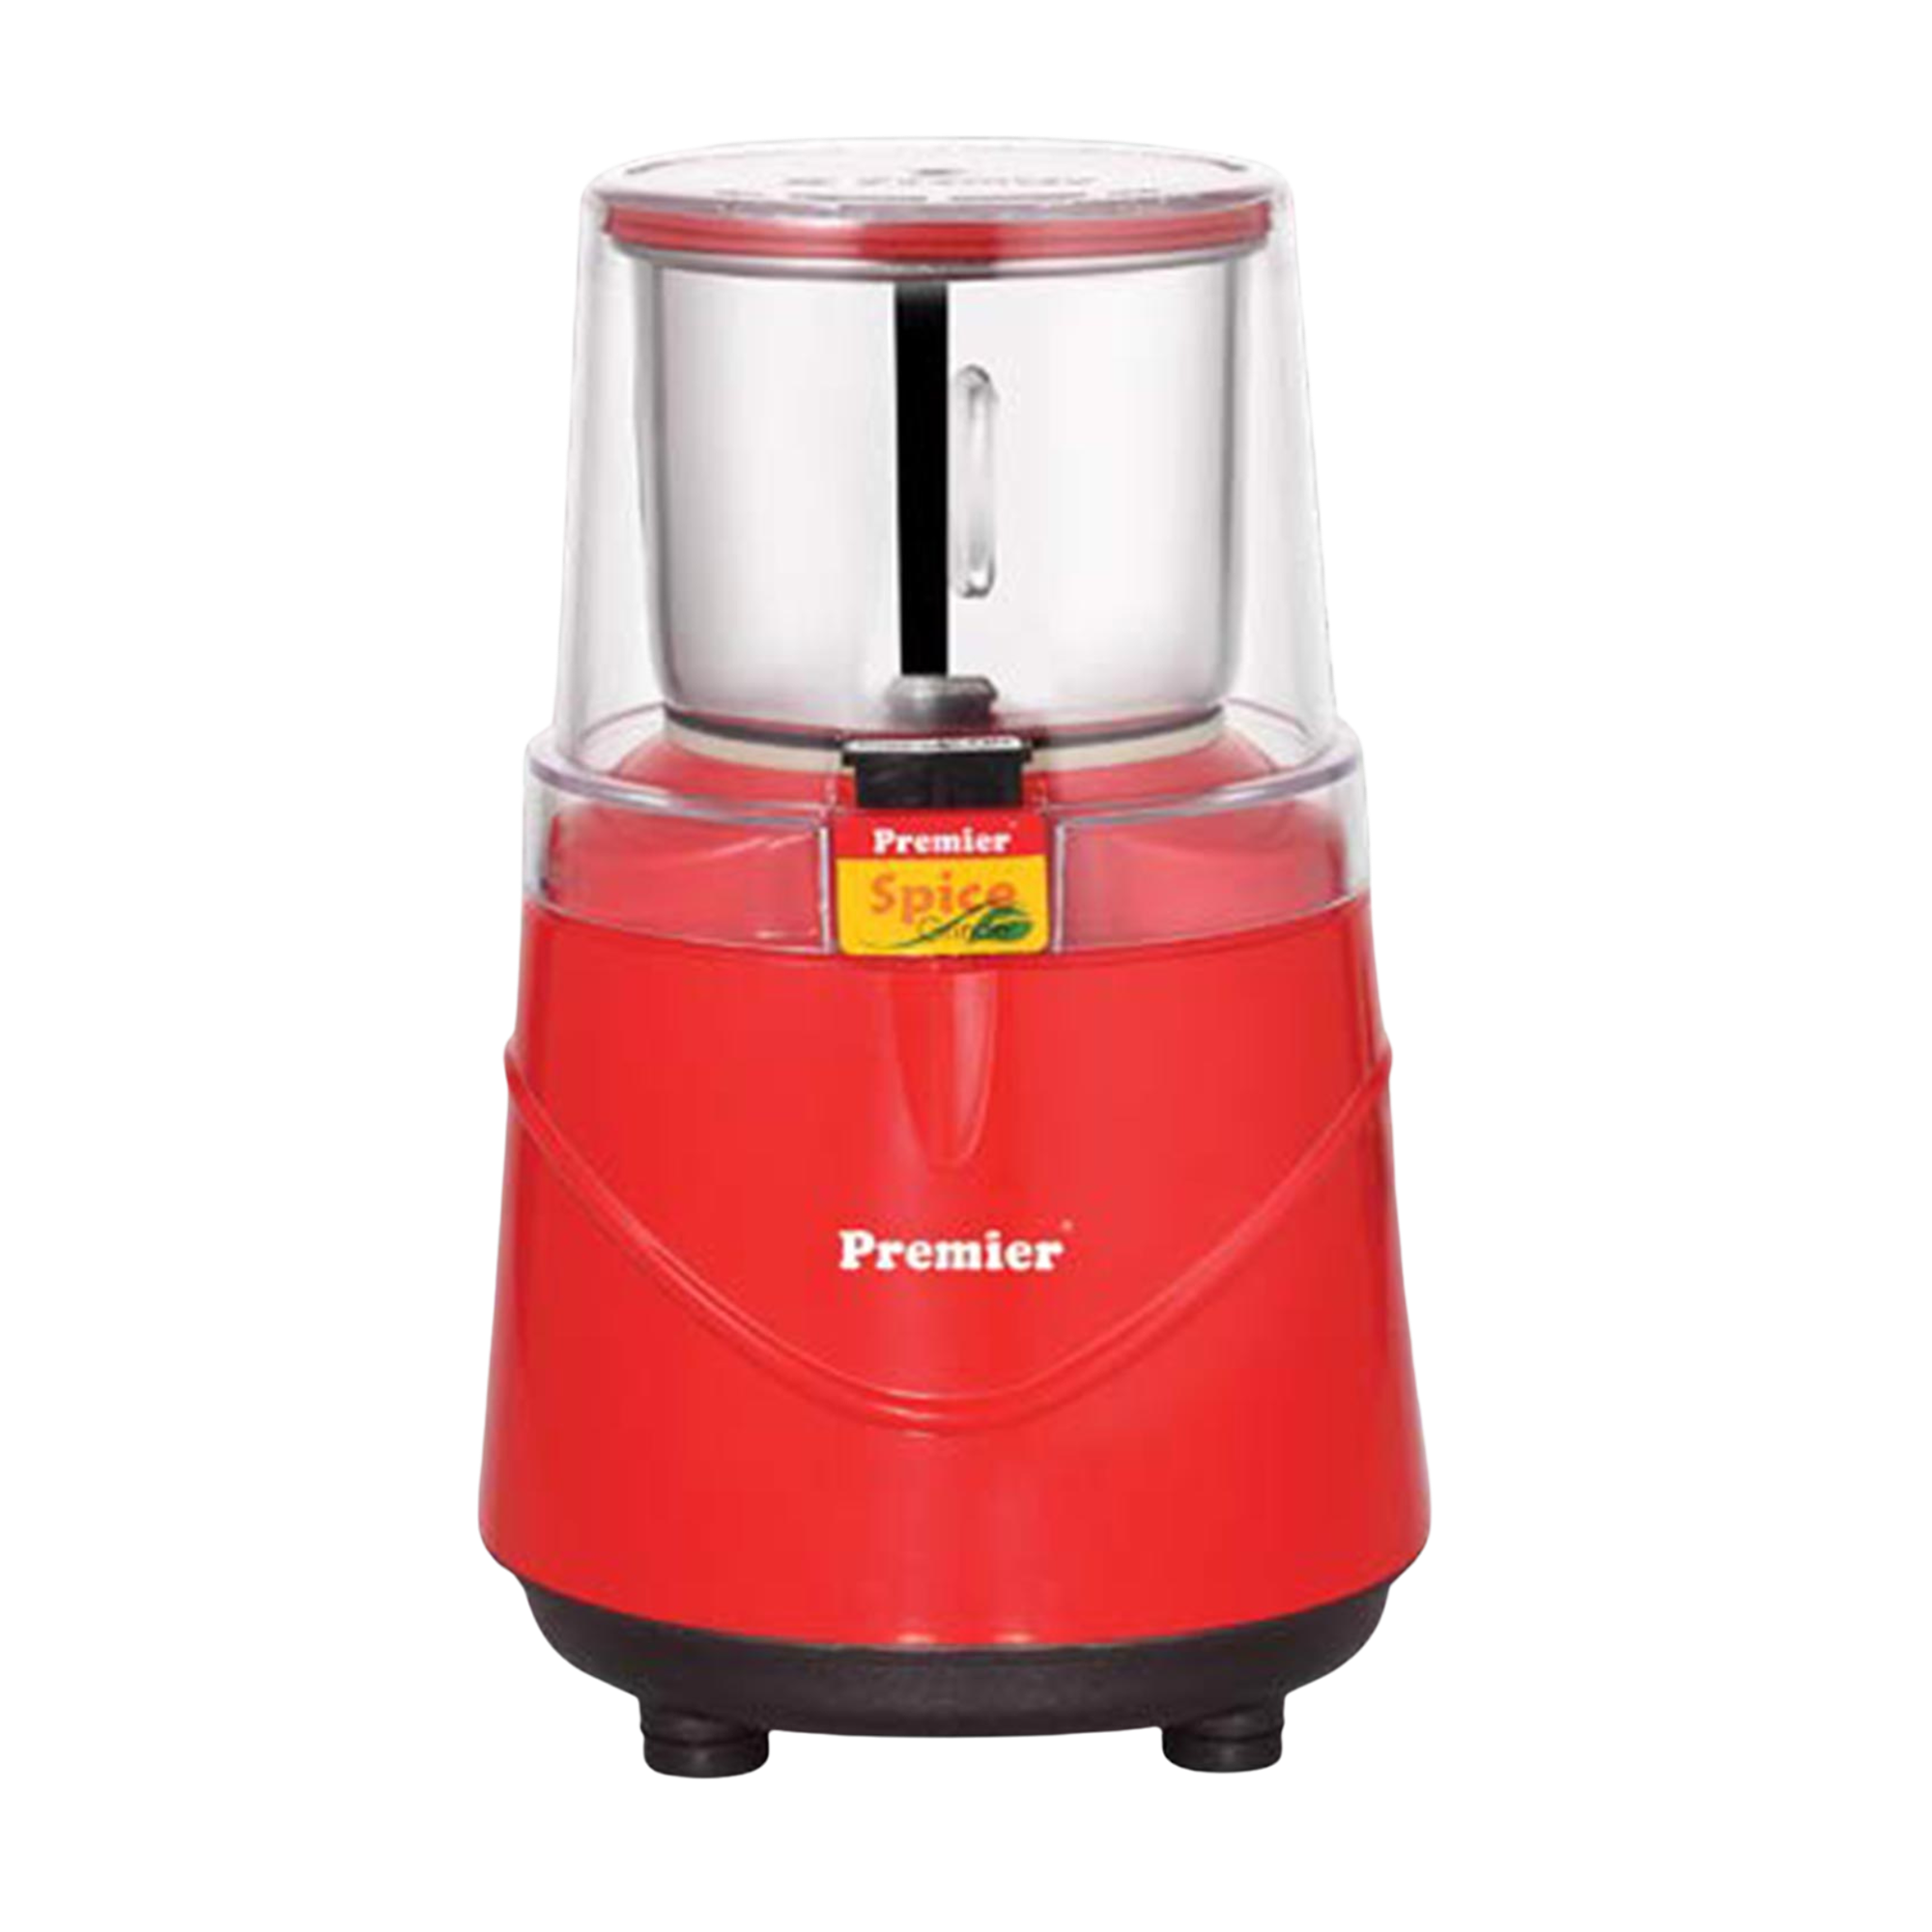 Buy Premier Spice KM 521 350W Mixer Grinder at Poorvika at best price.